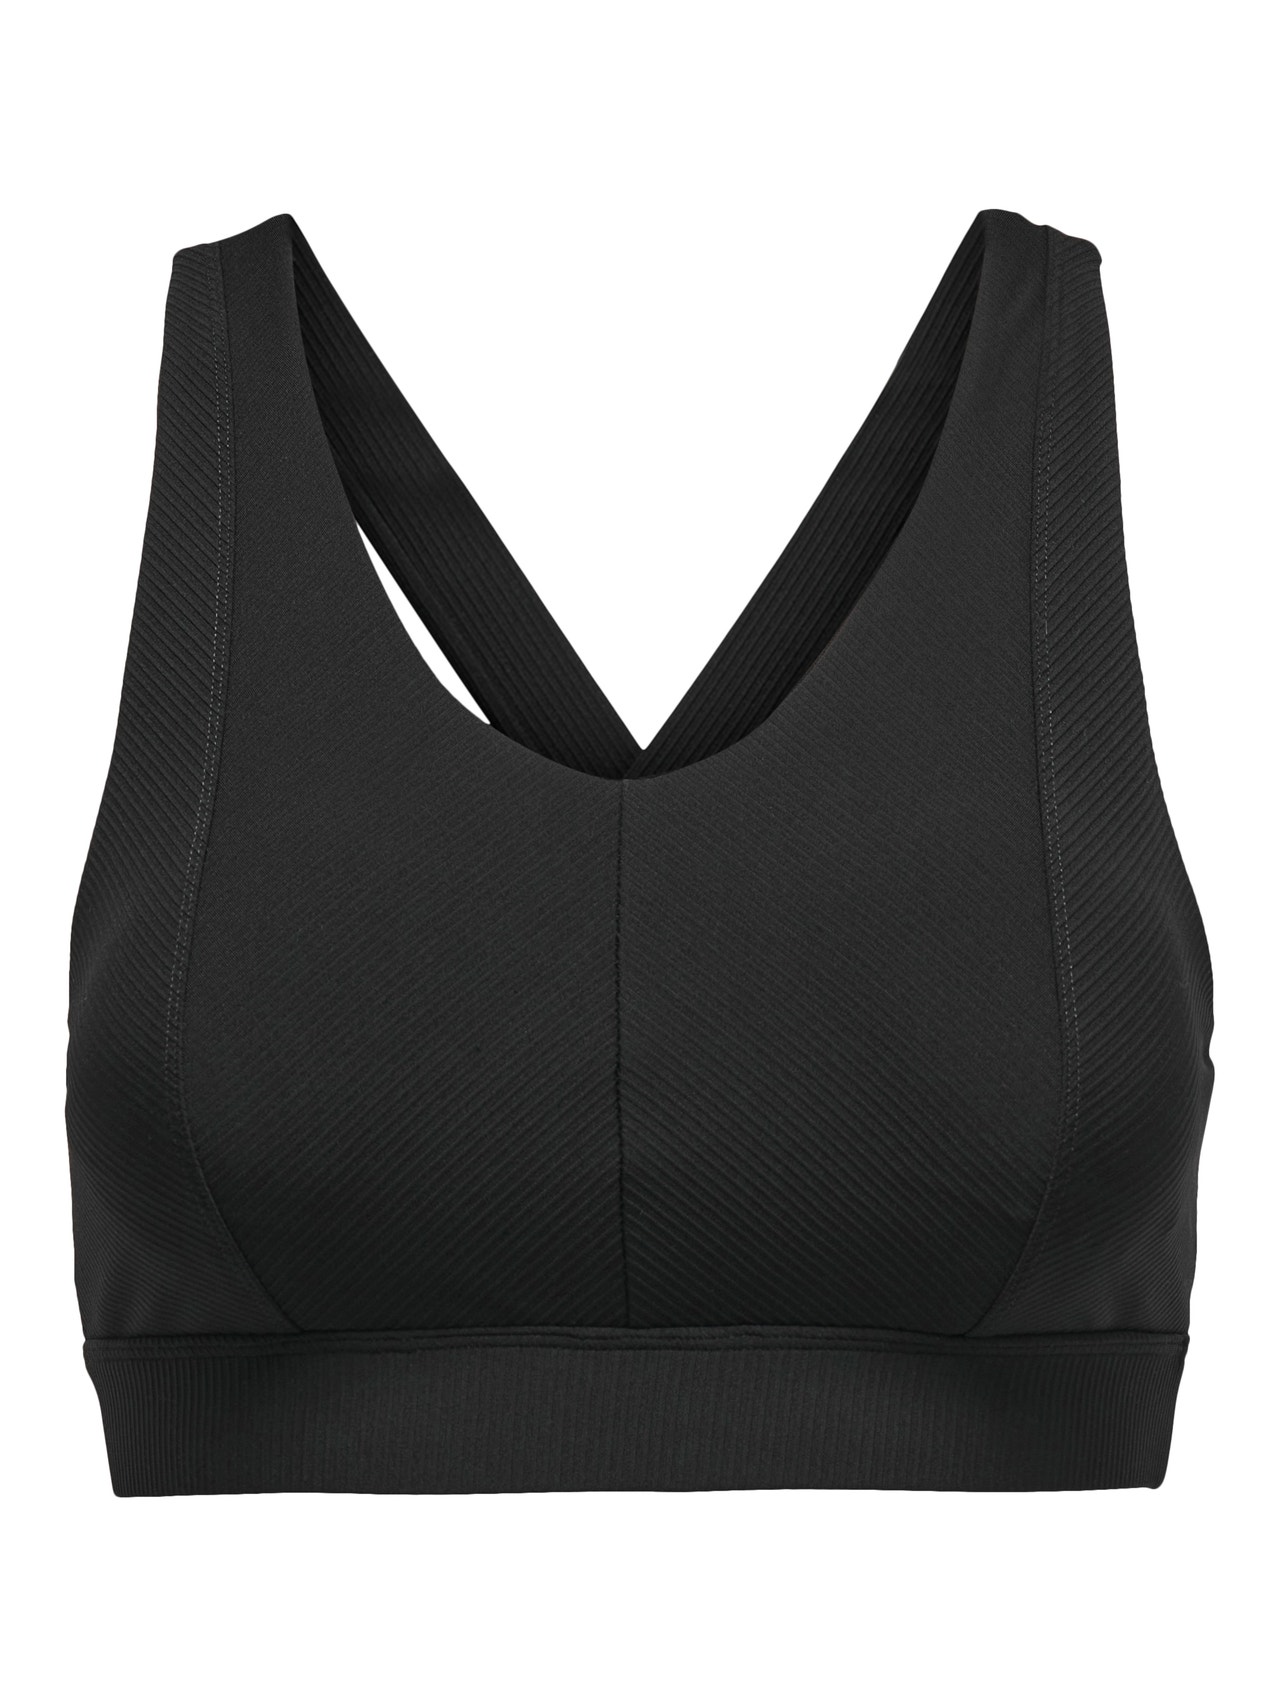 ONLY Cross back sports bra -Black - 15275259